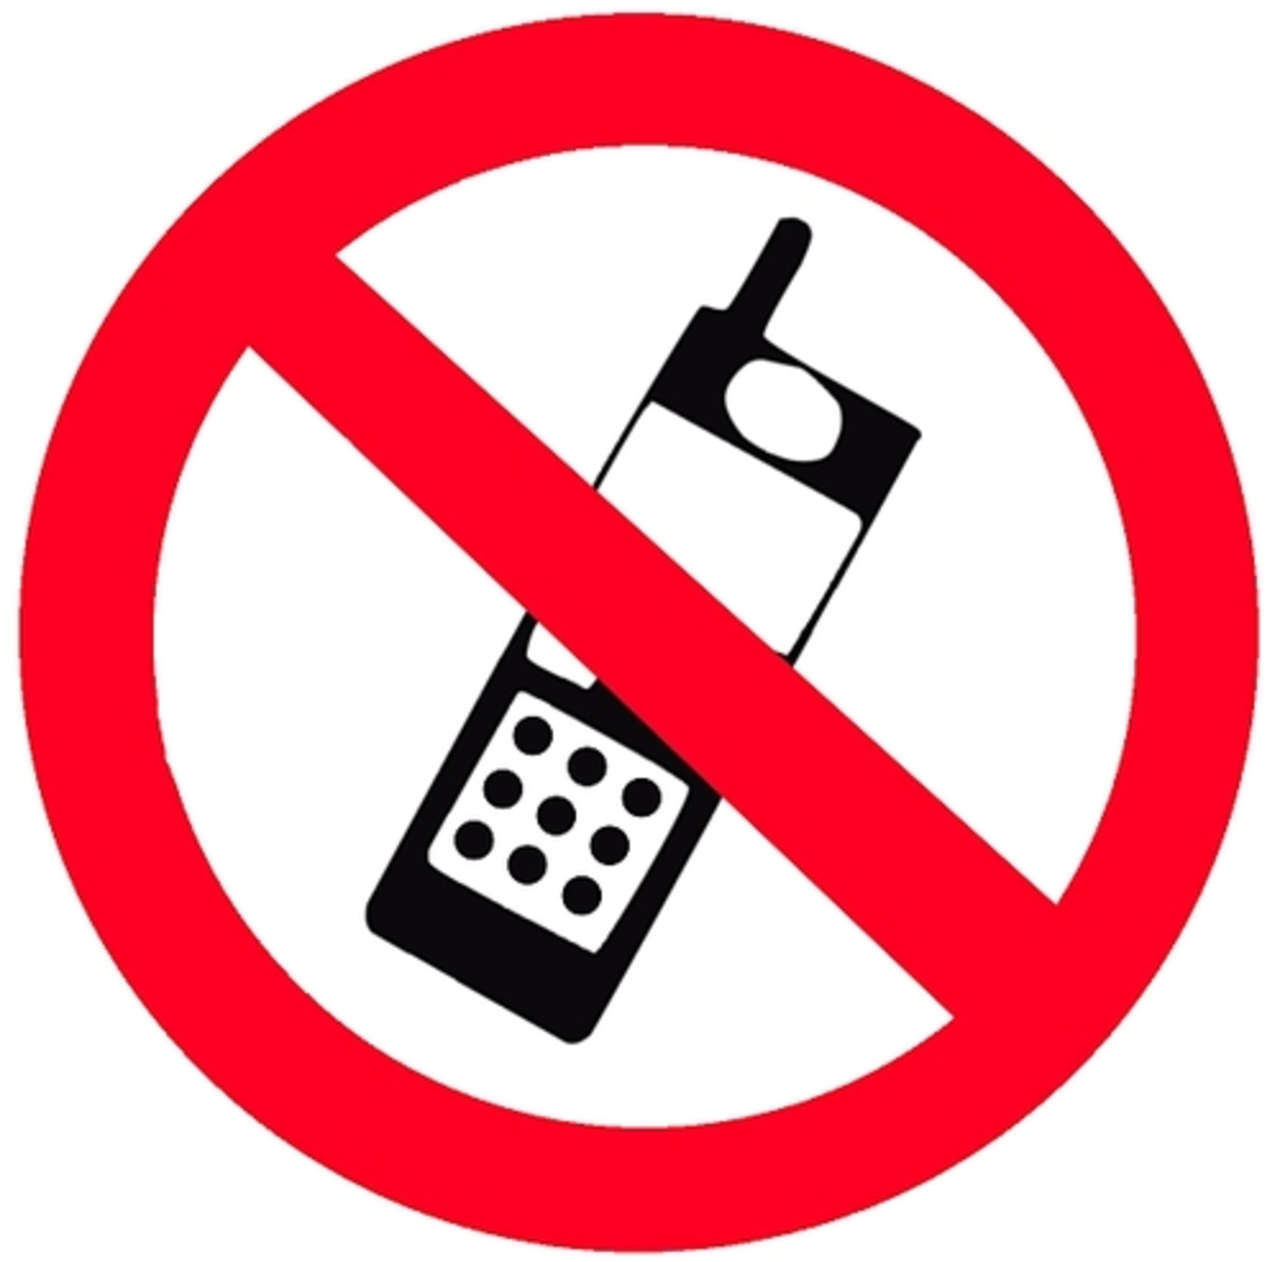 Картинка без телефона. Мобильник запрещен. Табличка запрет телефона. Мобильные телефоны запрещены. Выключите мобильные телефоны.